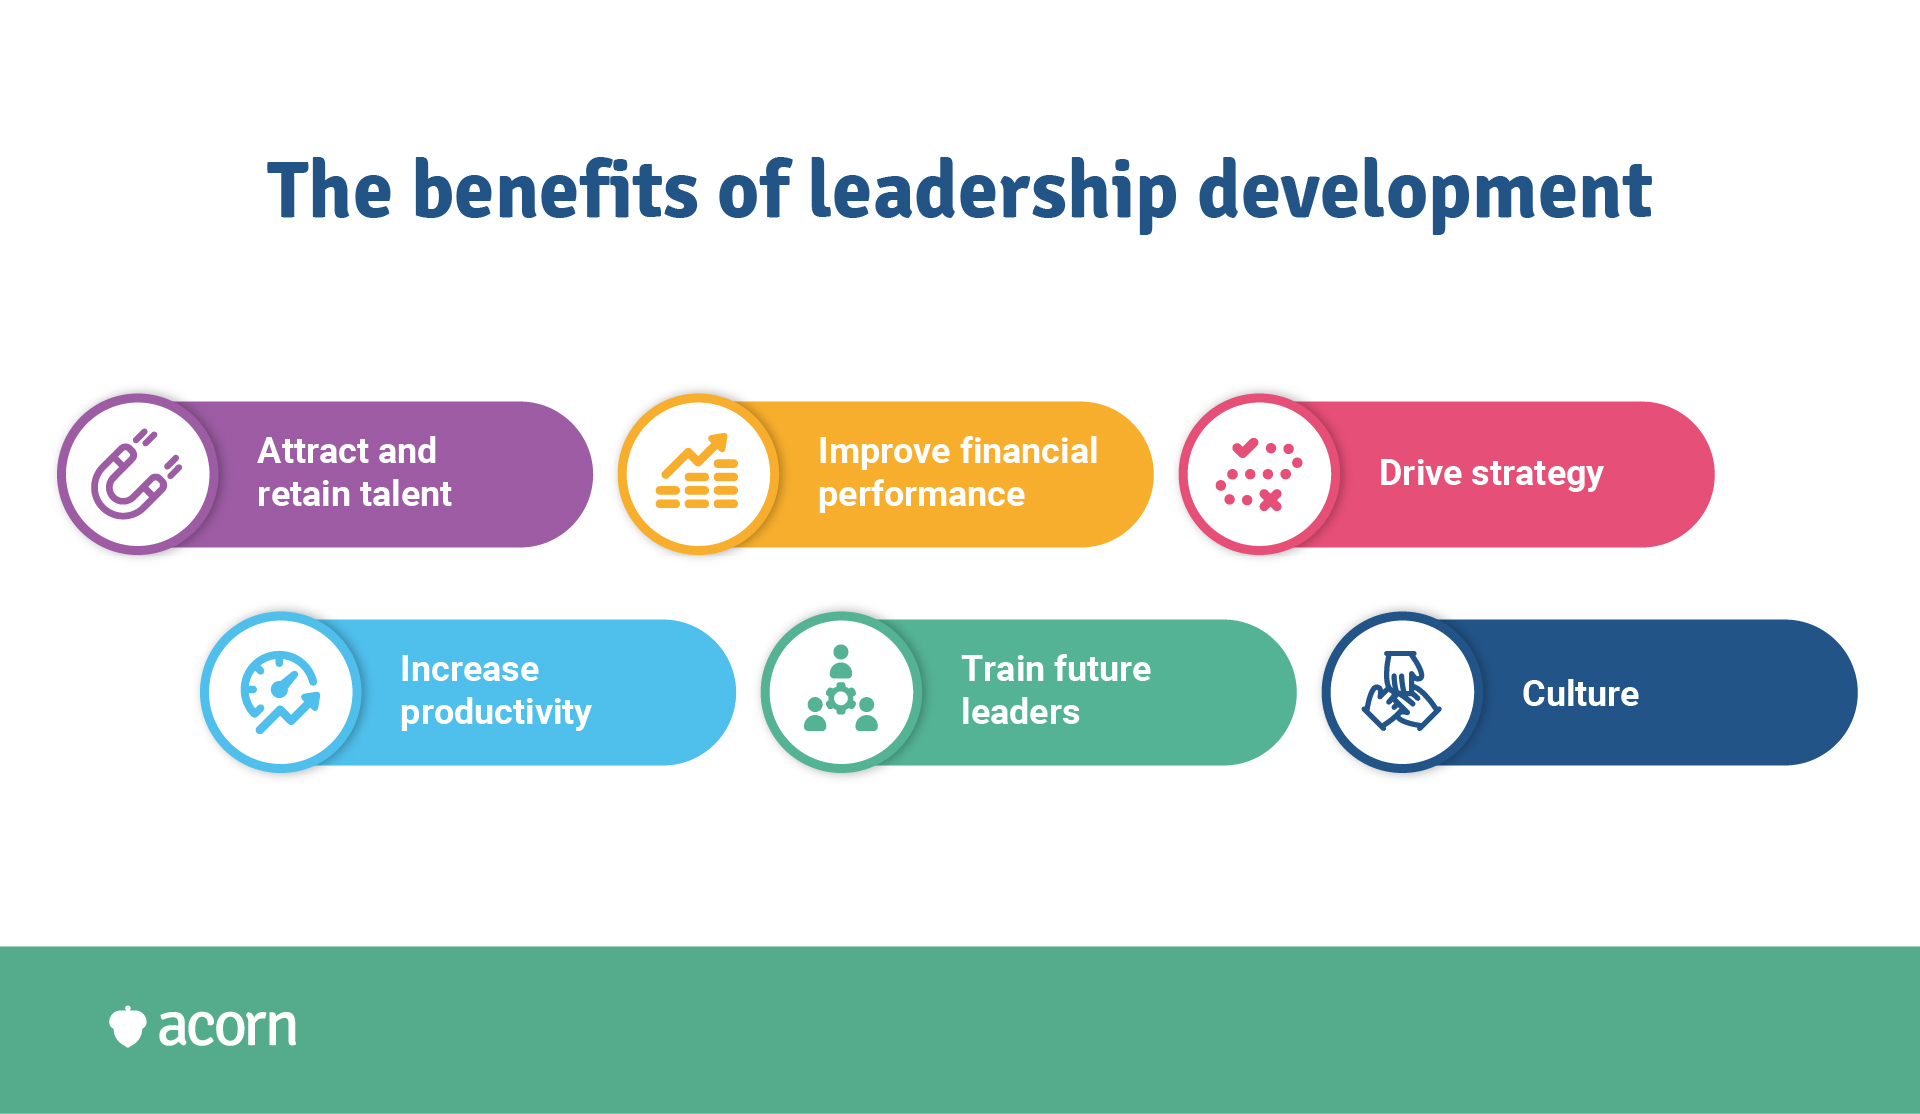 The benefits of leadership development